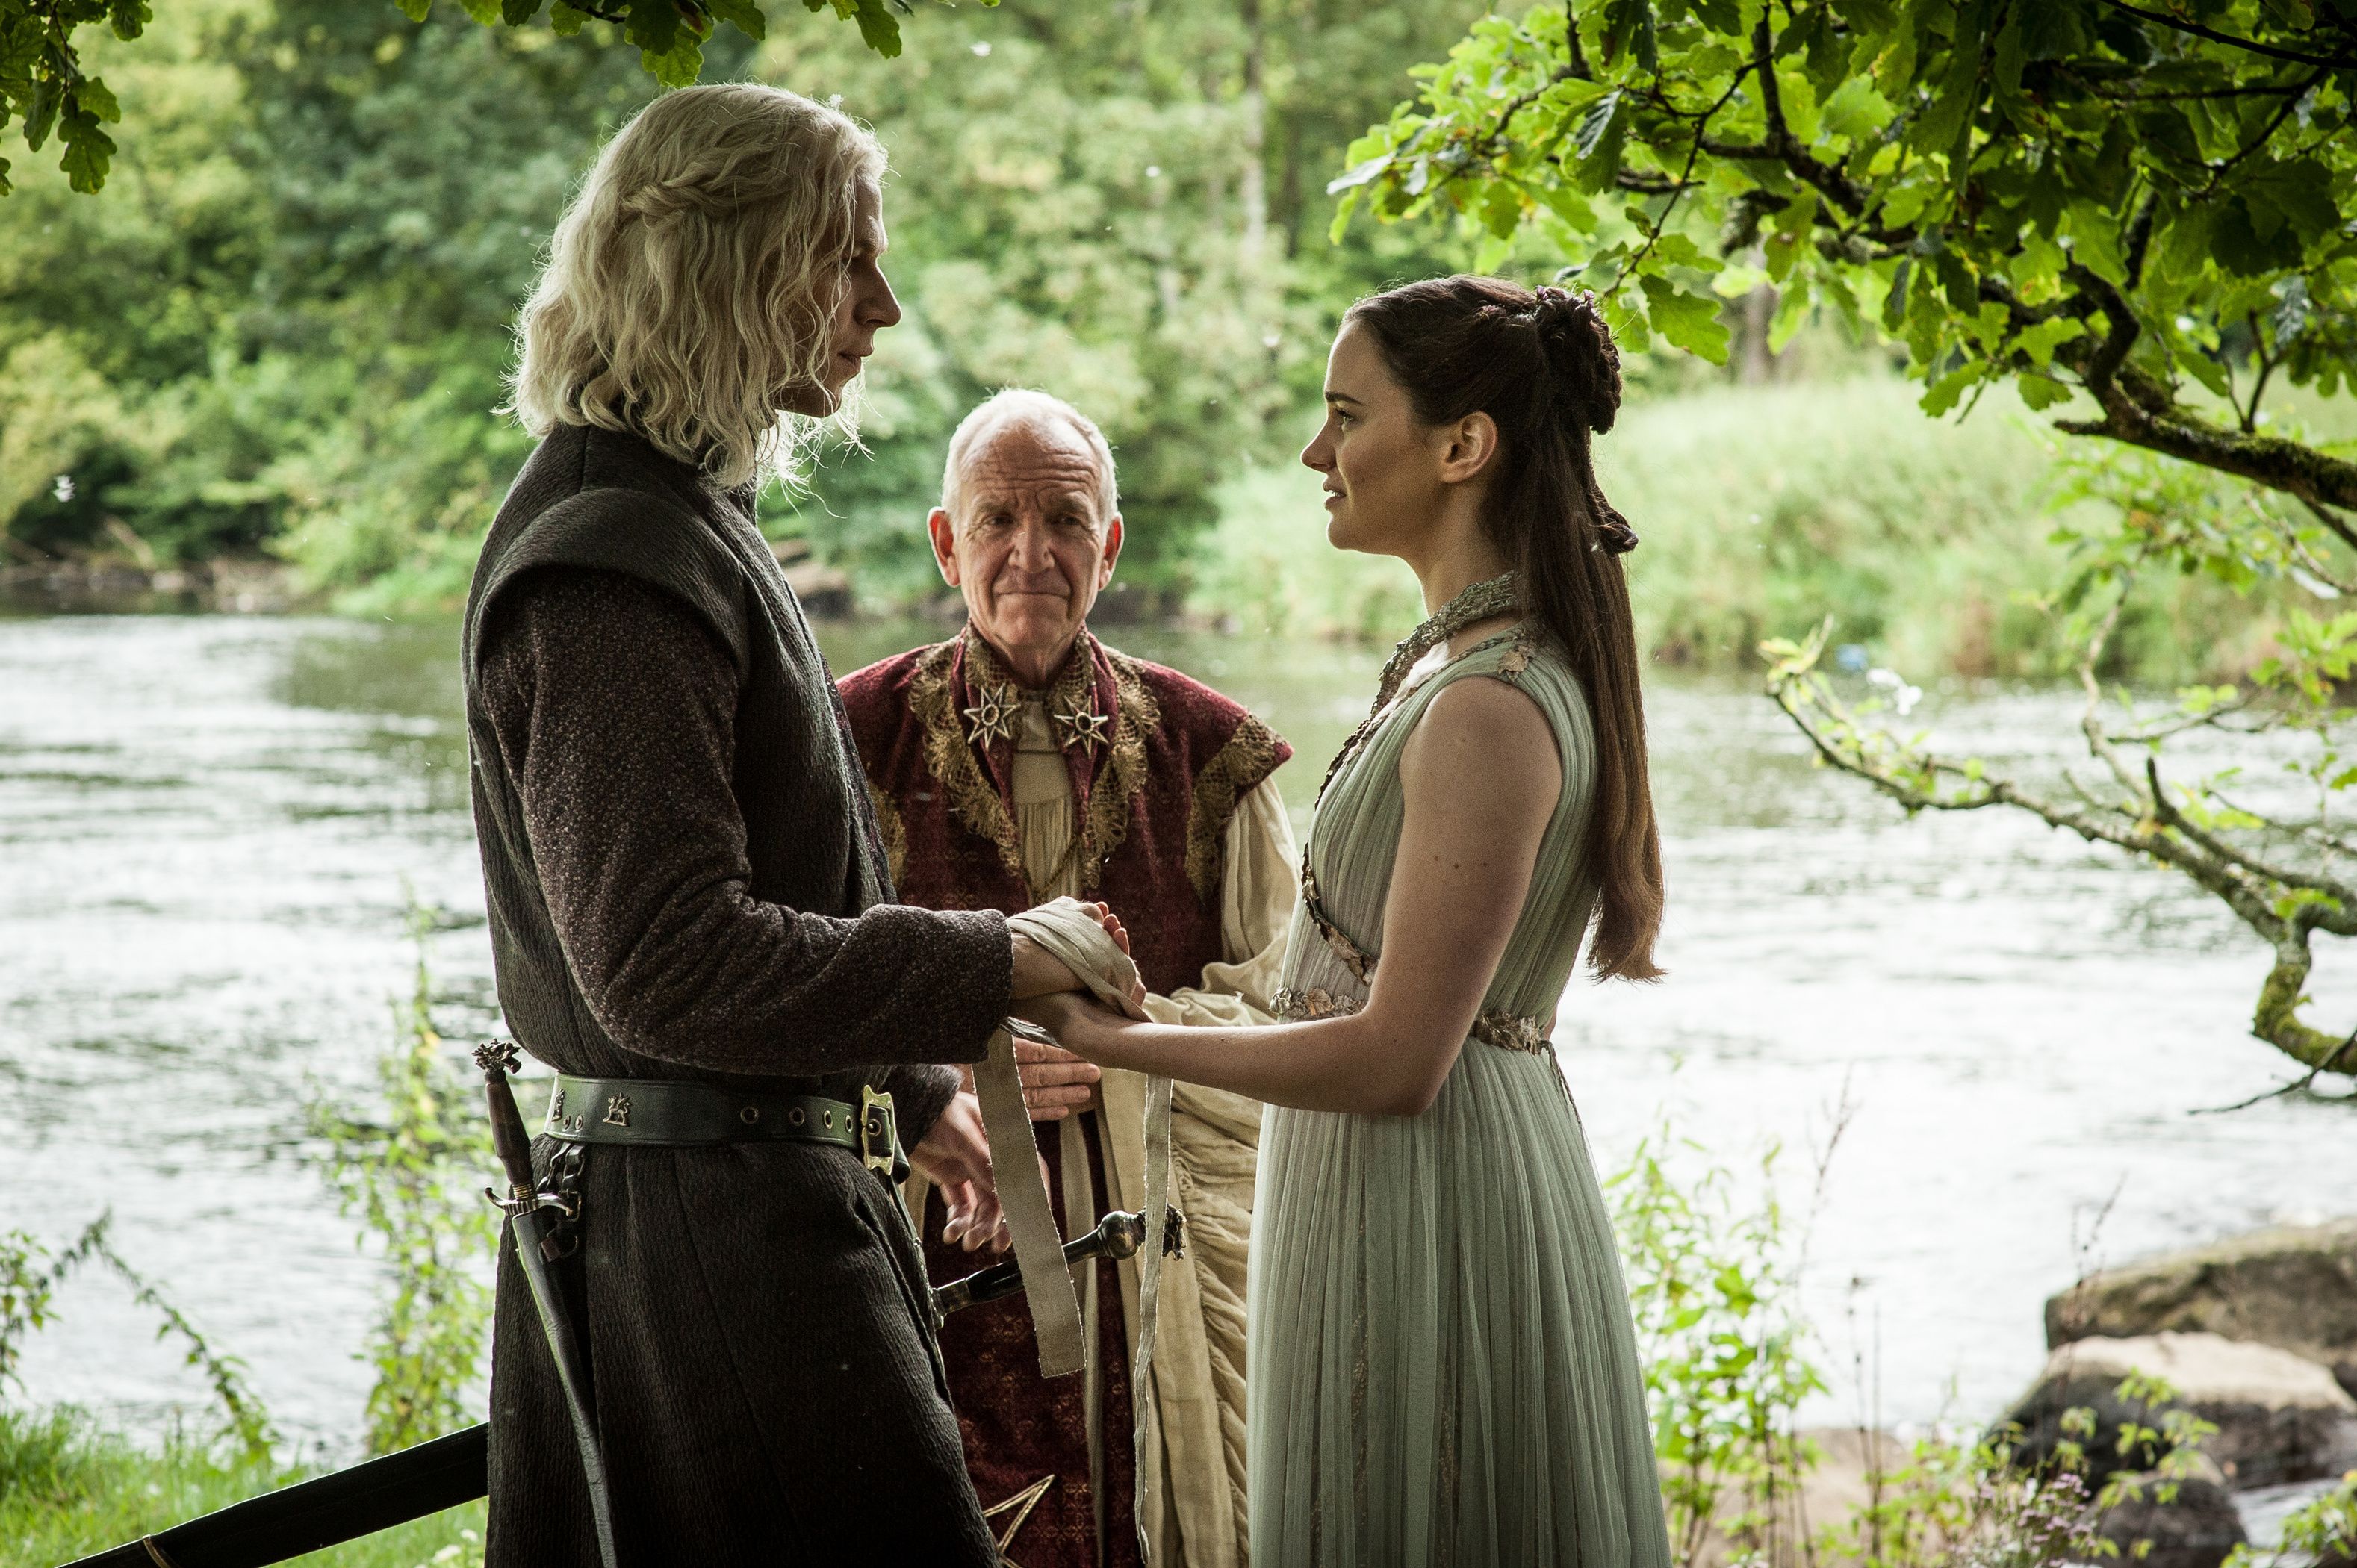 Le mariage de Rhaegar et Lyanna dans Game of Thrones